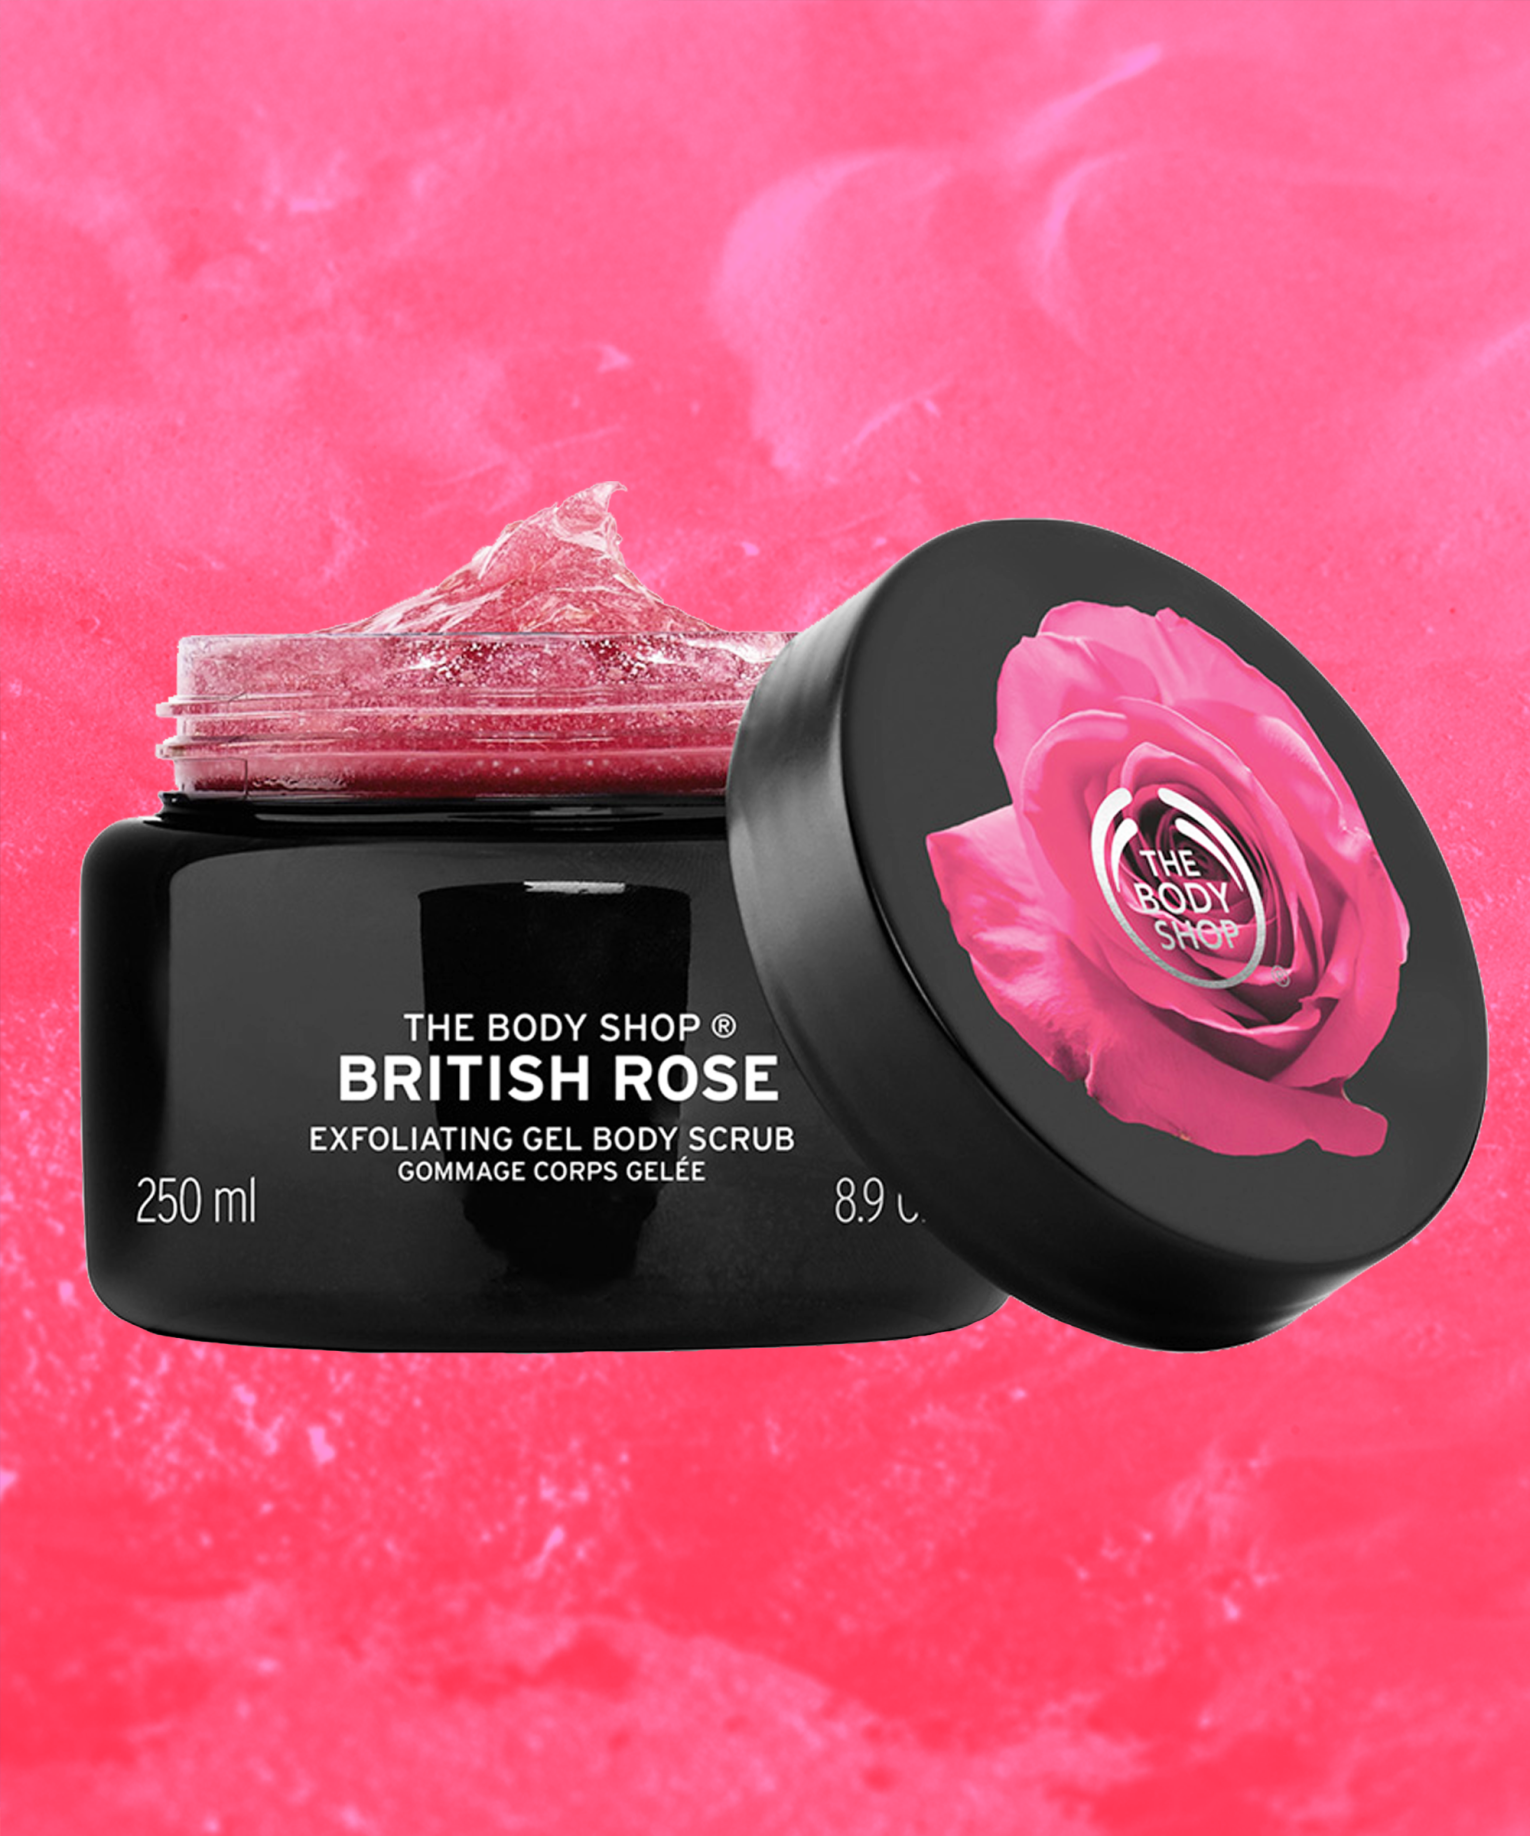 Image result for british rose exfoliating gel body scrub